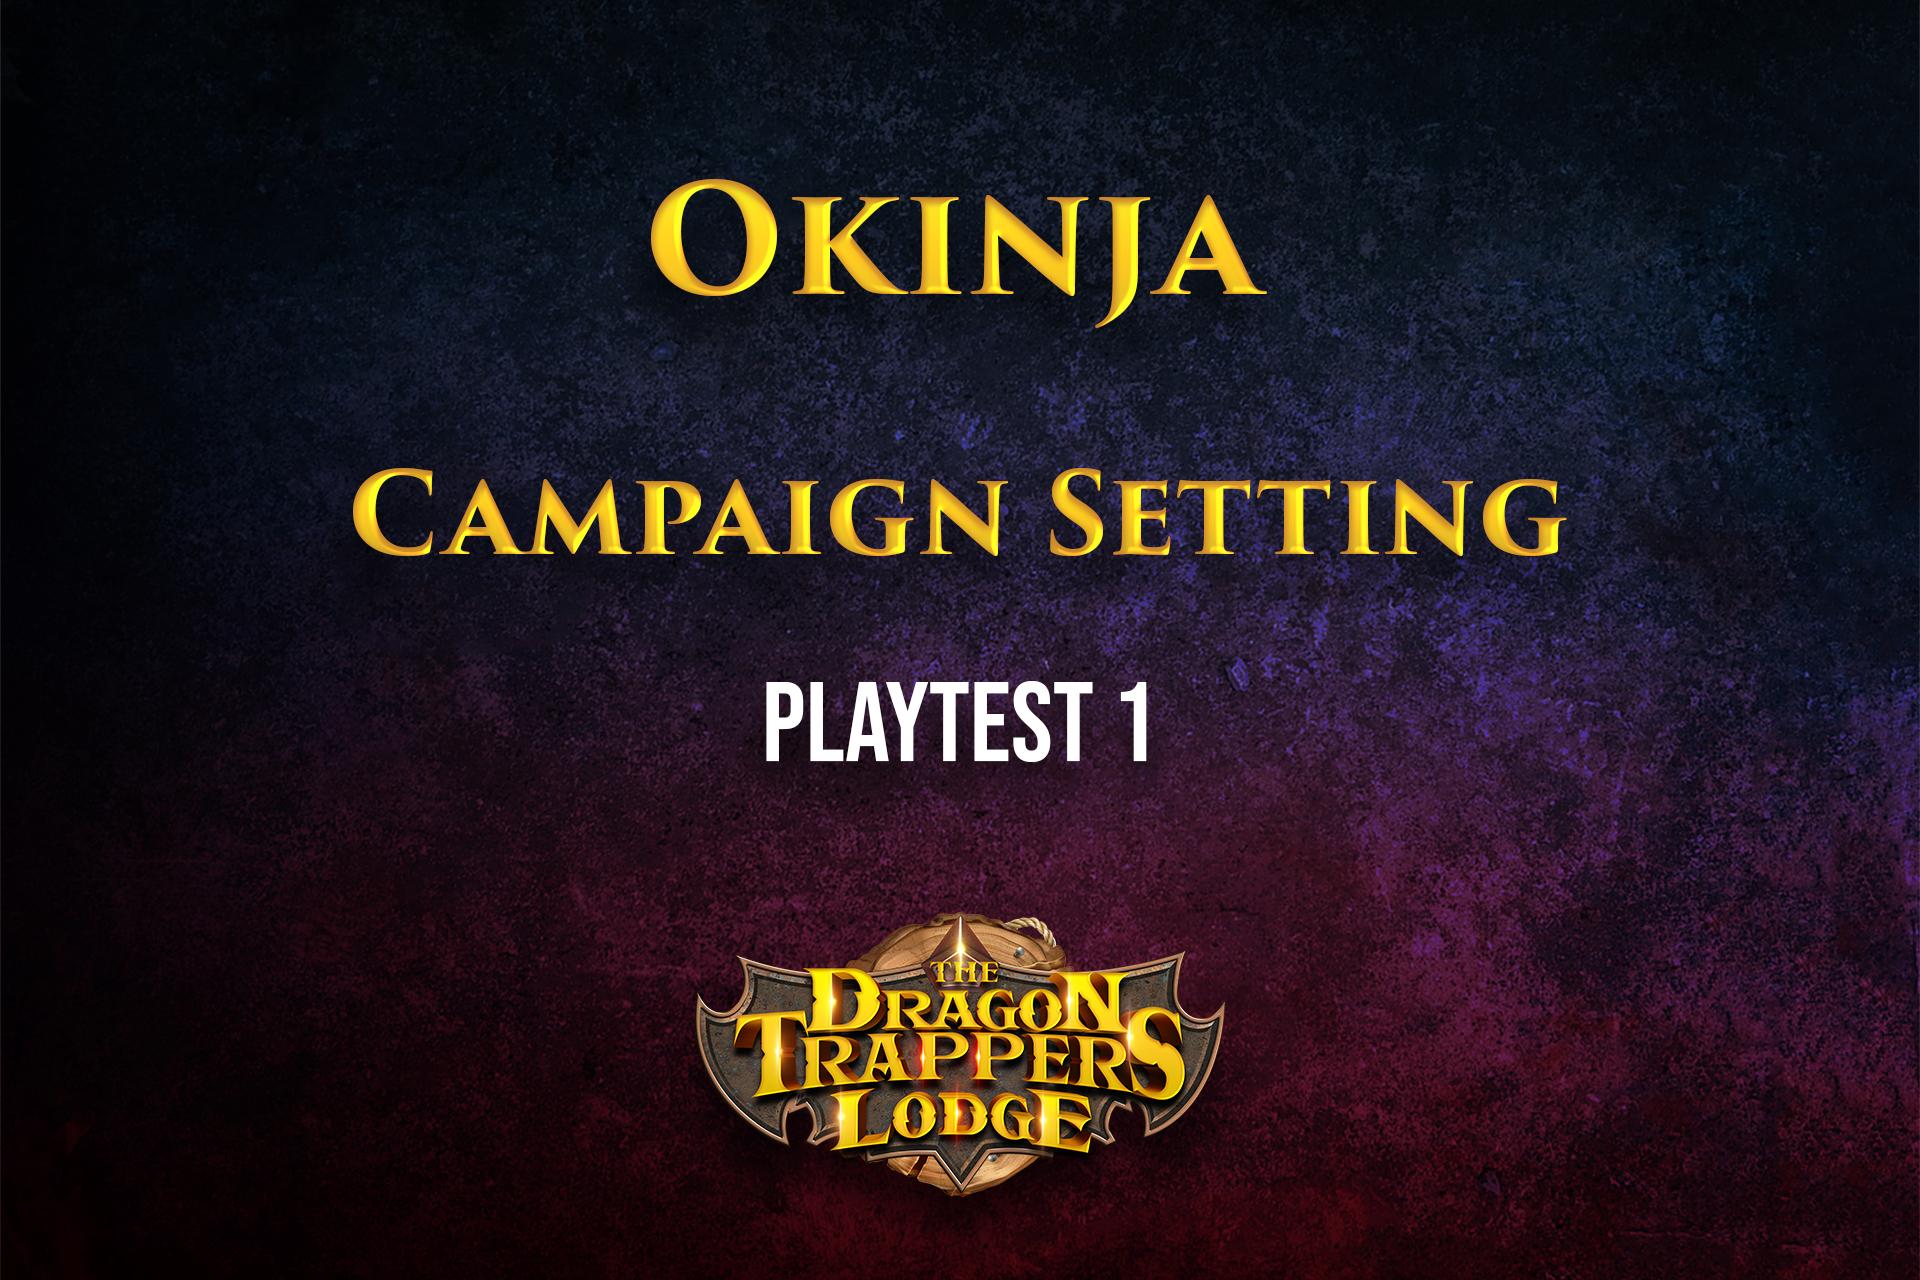 The Okinja Campaign Setting: Playtest 1